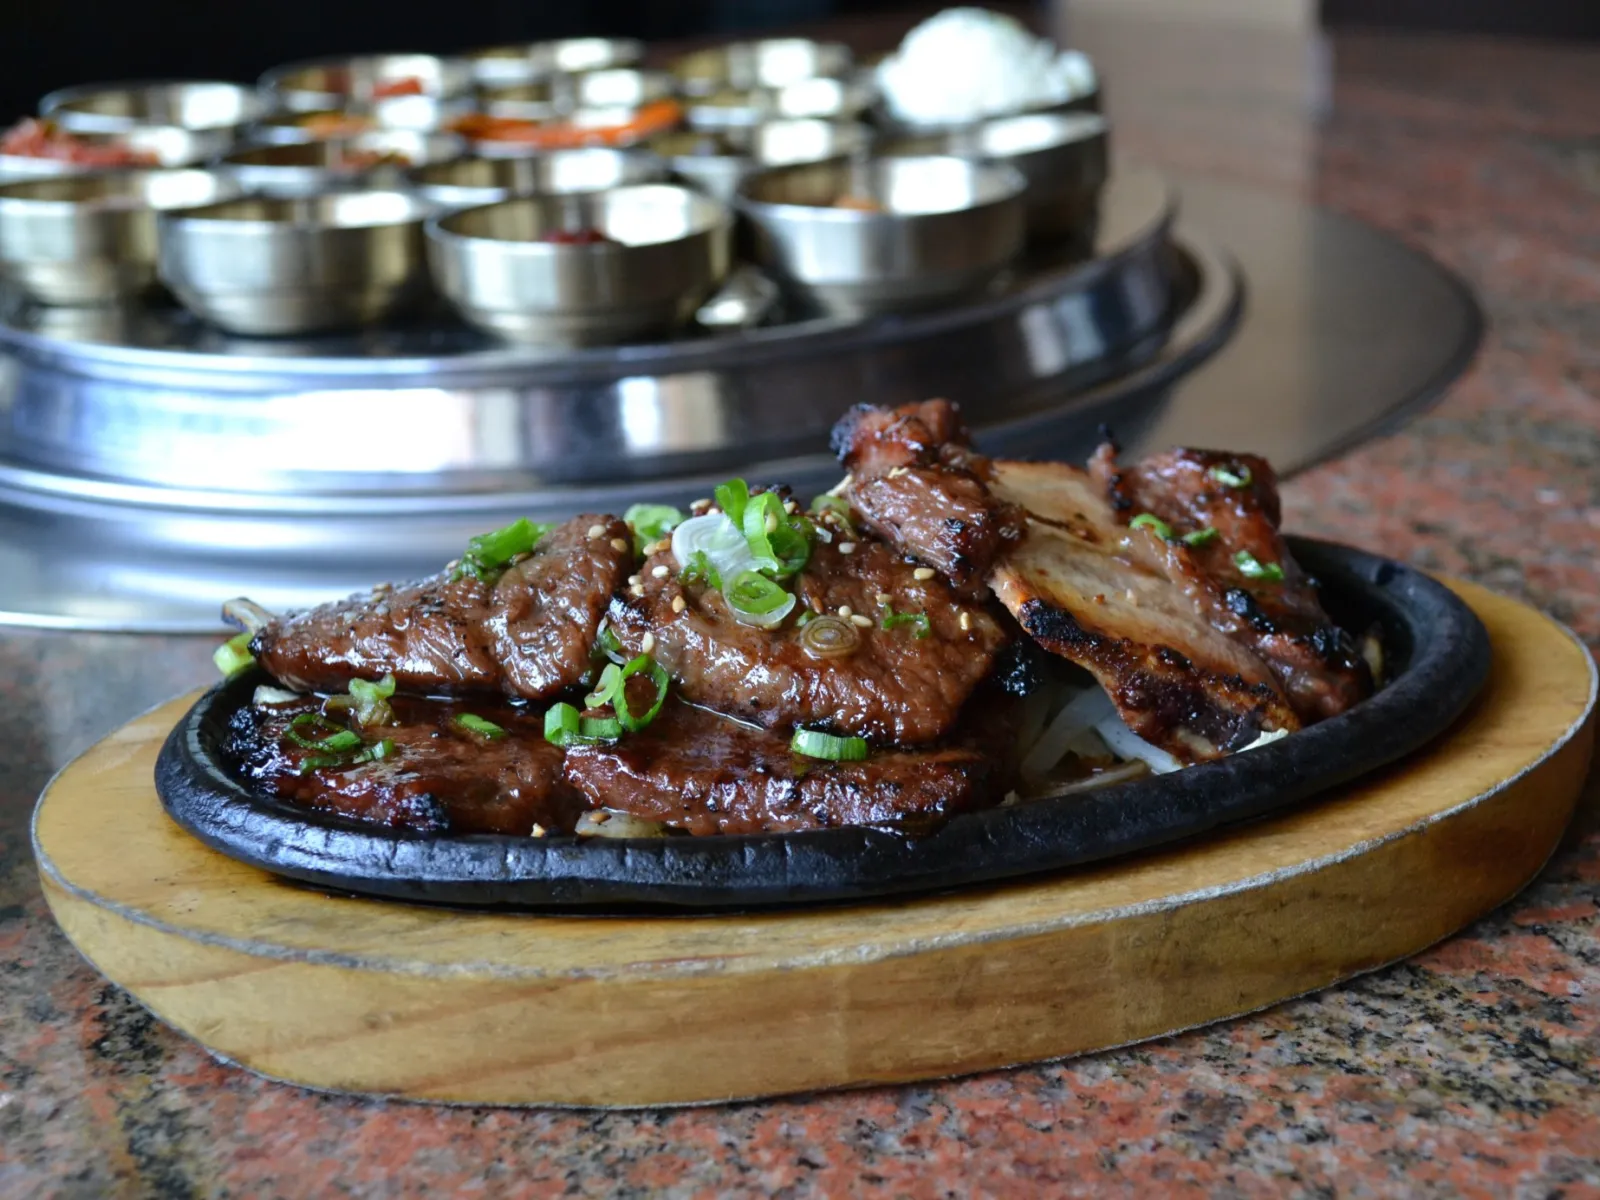 Genwa Korean BBQ Mid Wilshire Restaurant - Los Angeles, CA